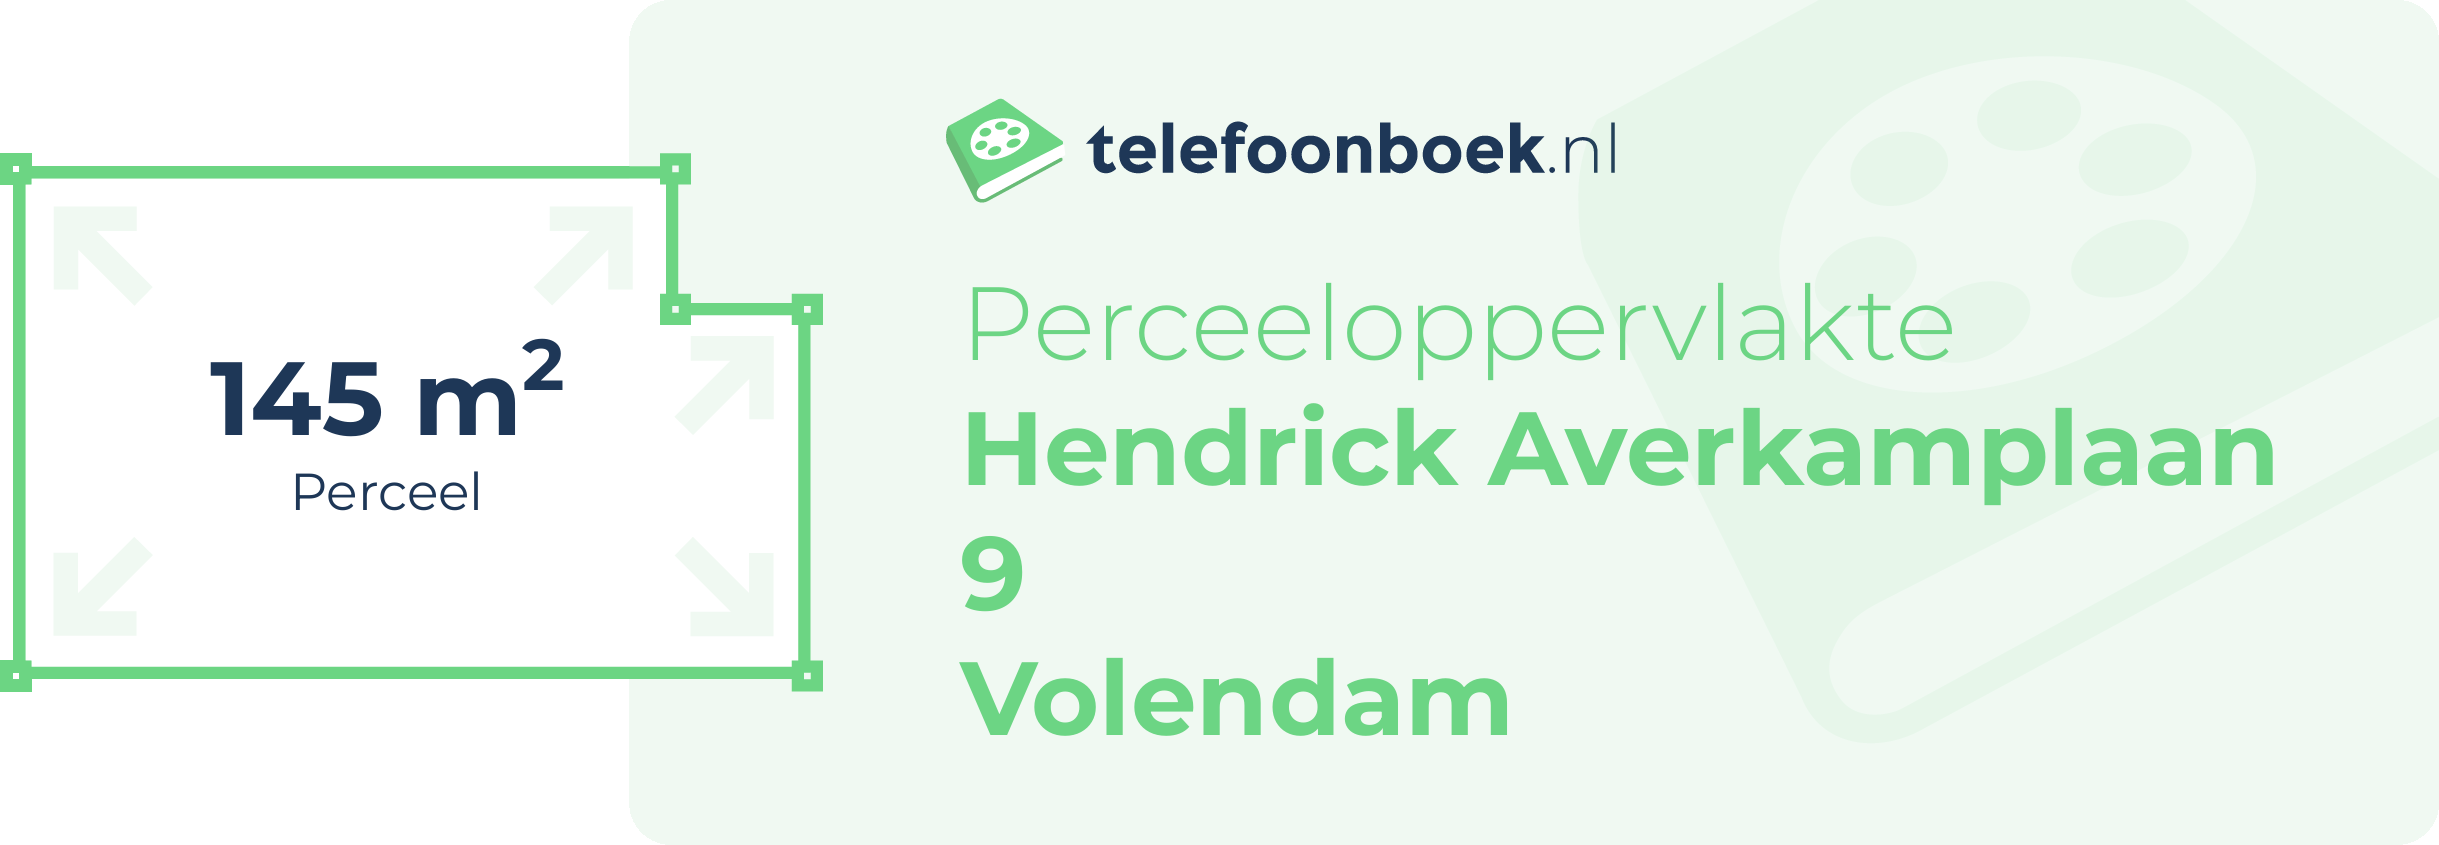 Perceeloppervlakte Hendrick Averkamplaan 9 Volendam